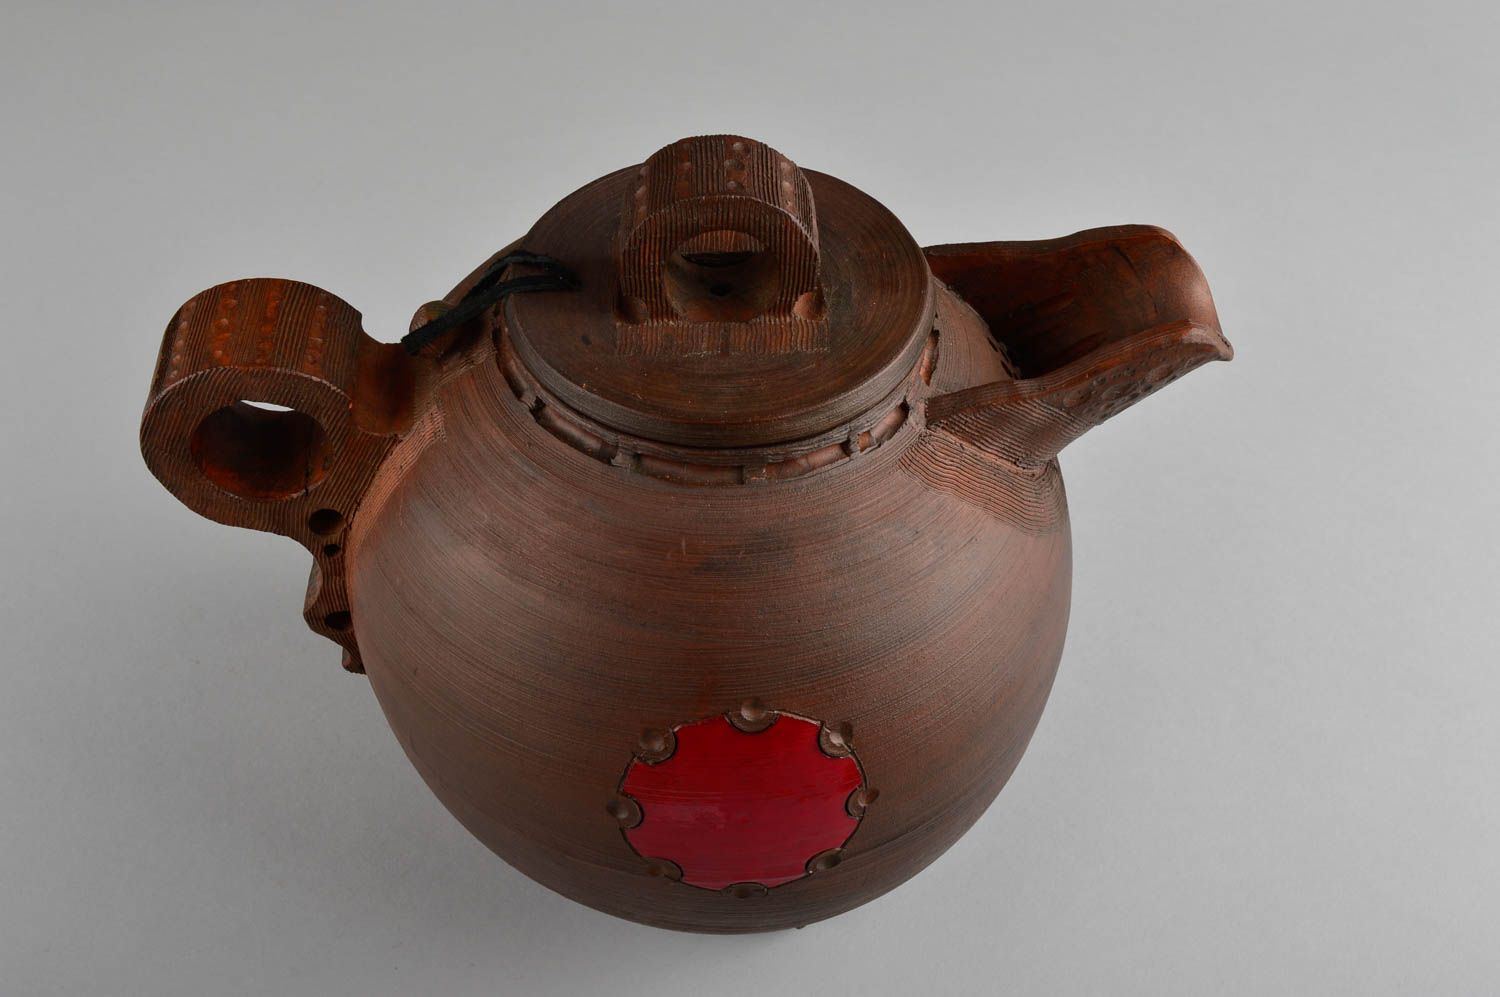 Unusual handmade ceramic teapot clay teapot design kitchen supplies ideas photo 4